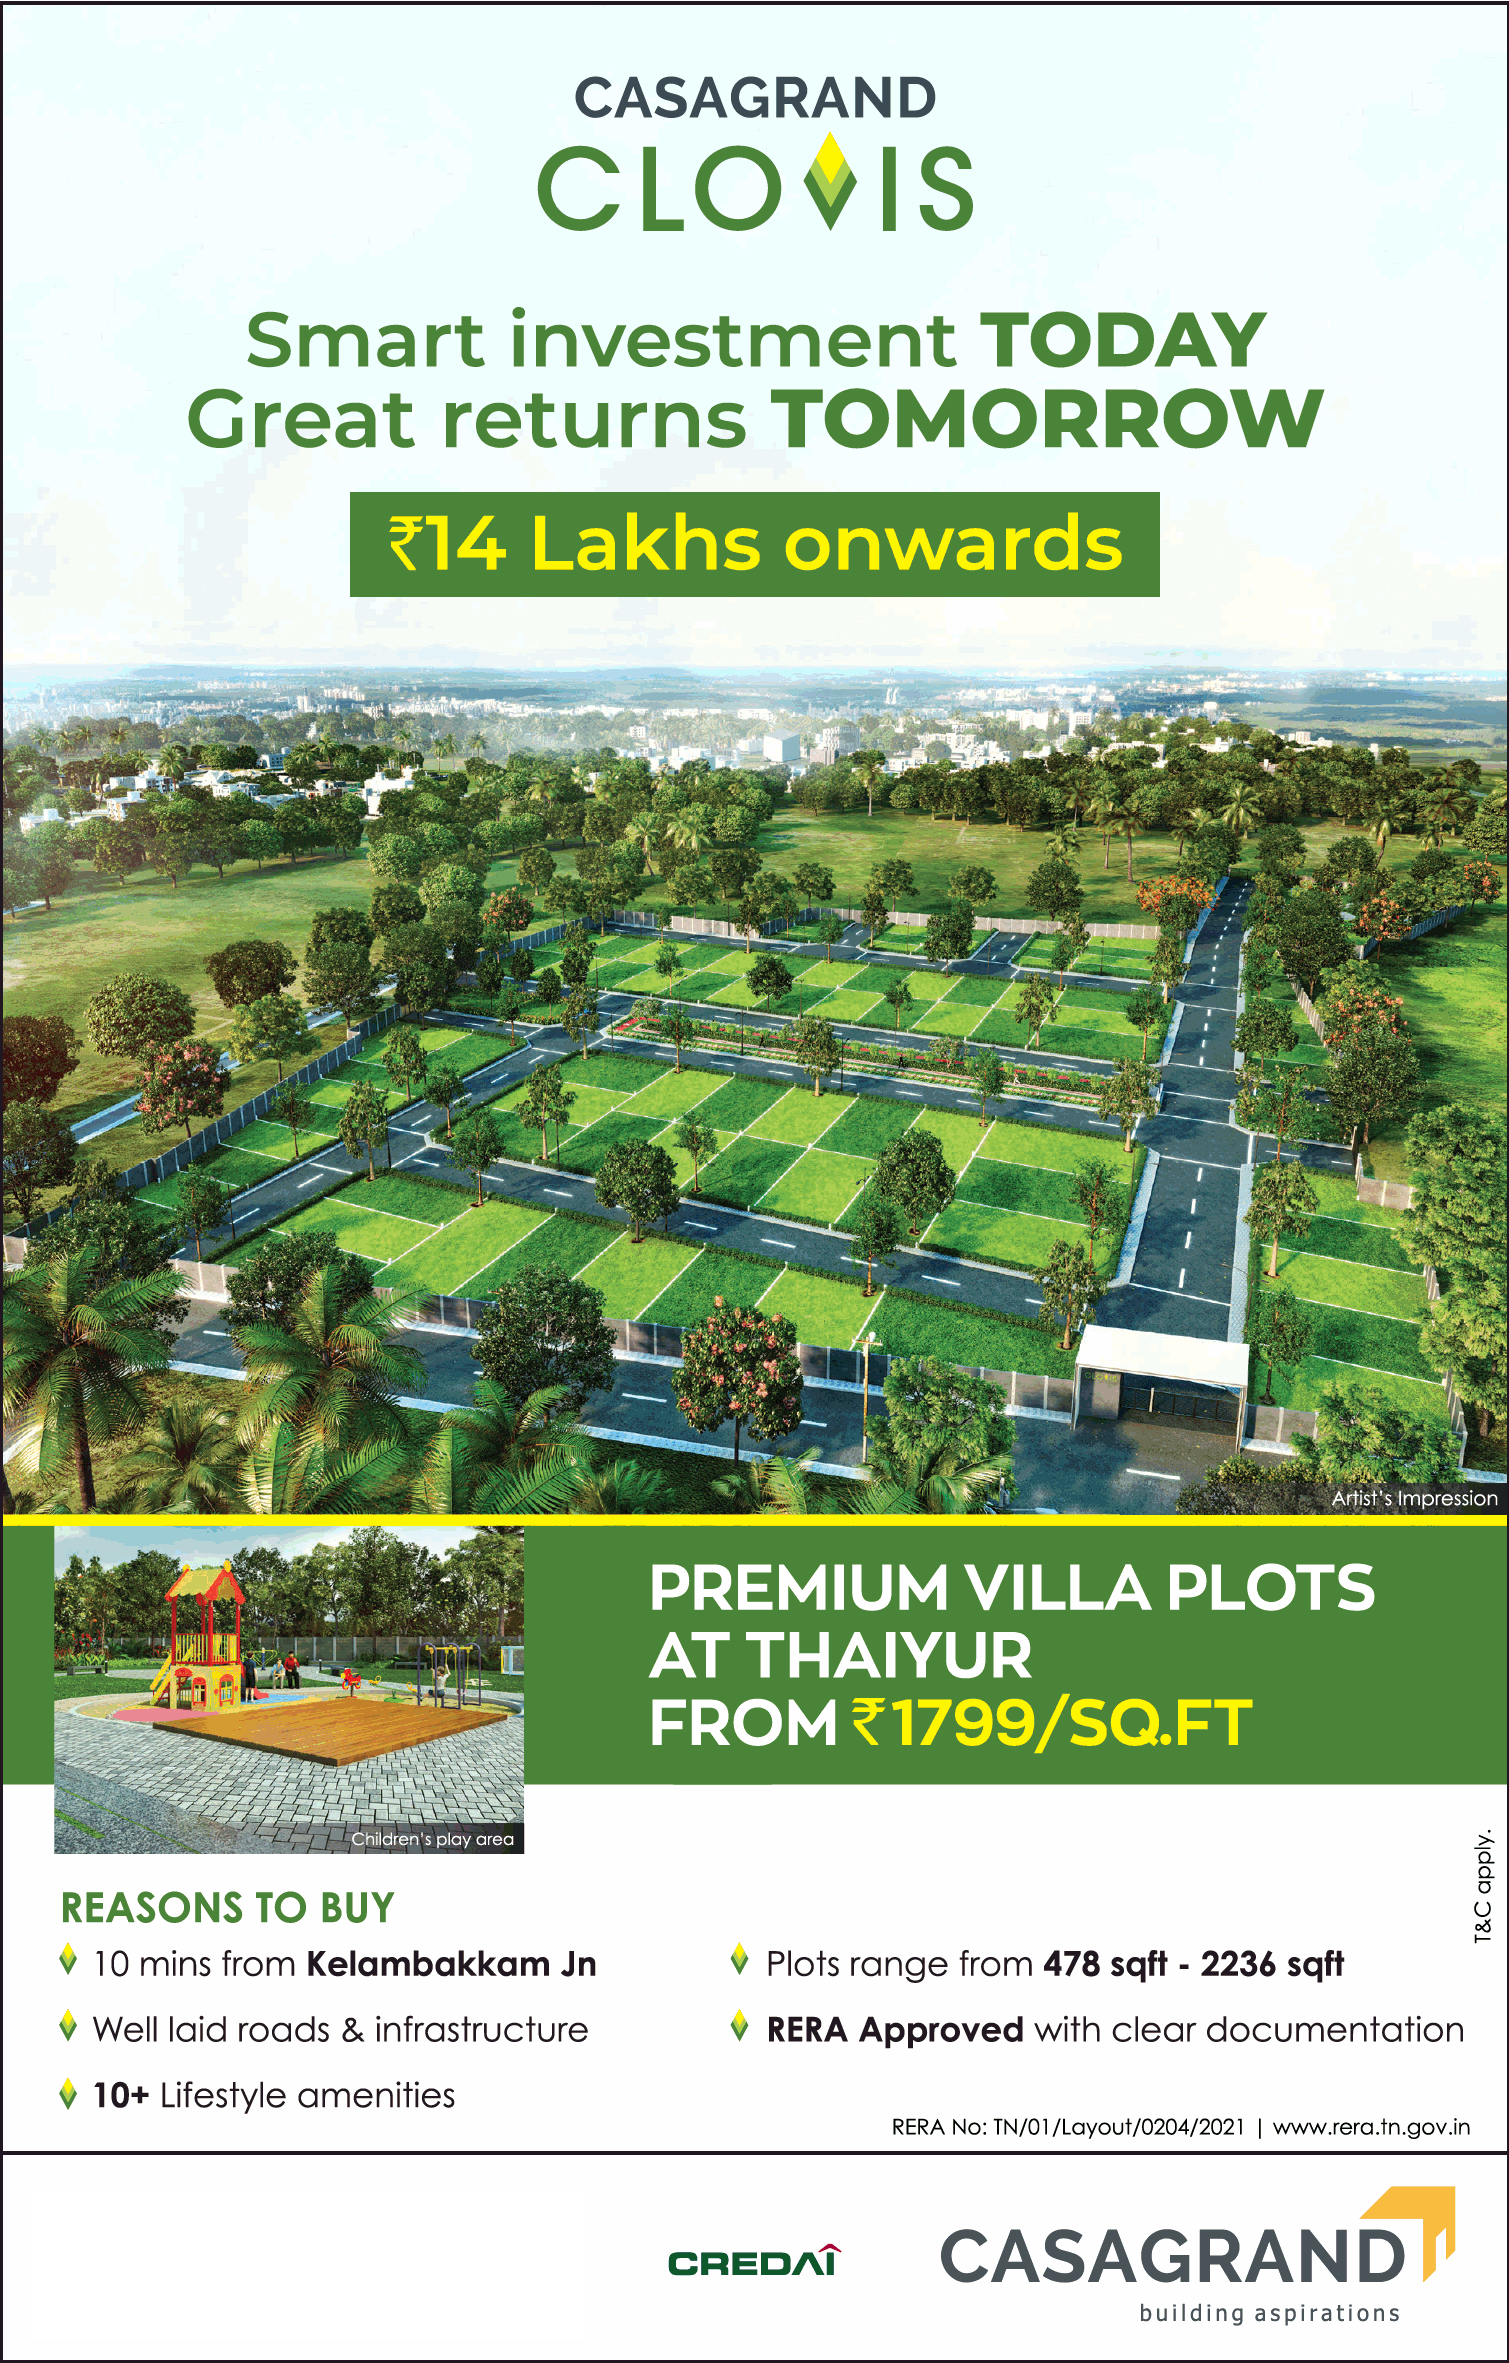 Premium villa plots from Rs 1799 per sqft at Casagrand Clovis in Chennai